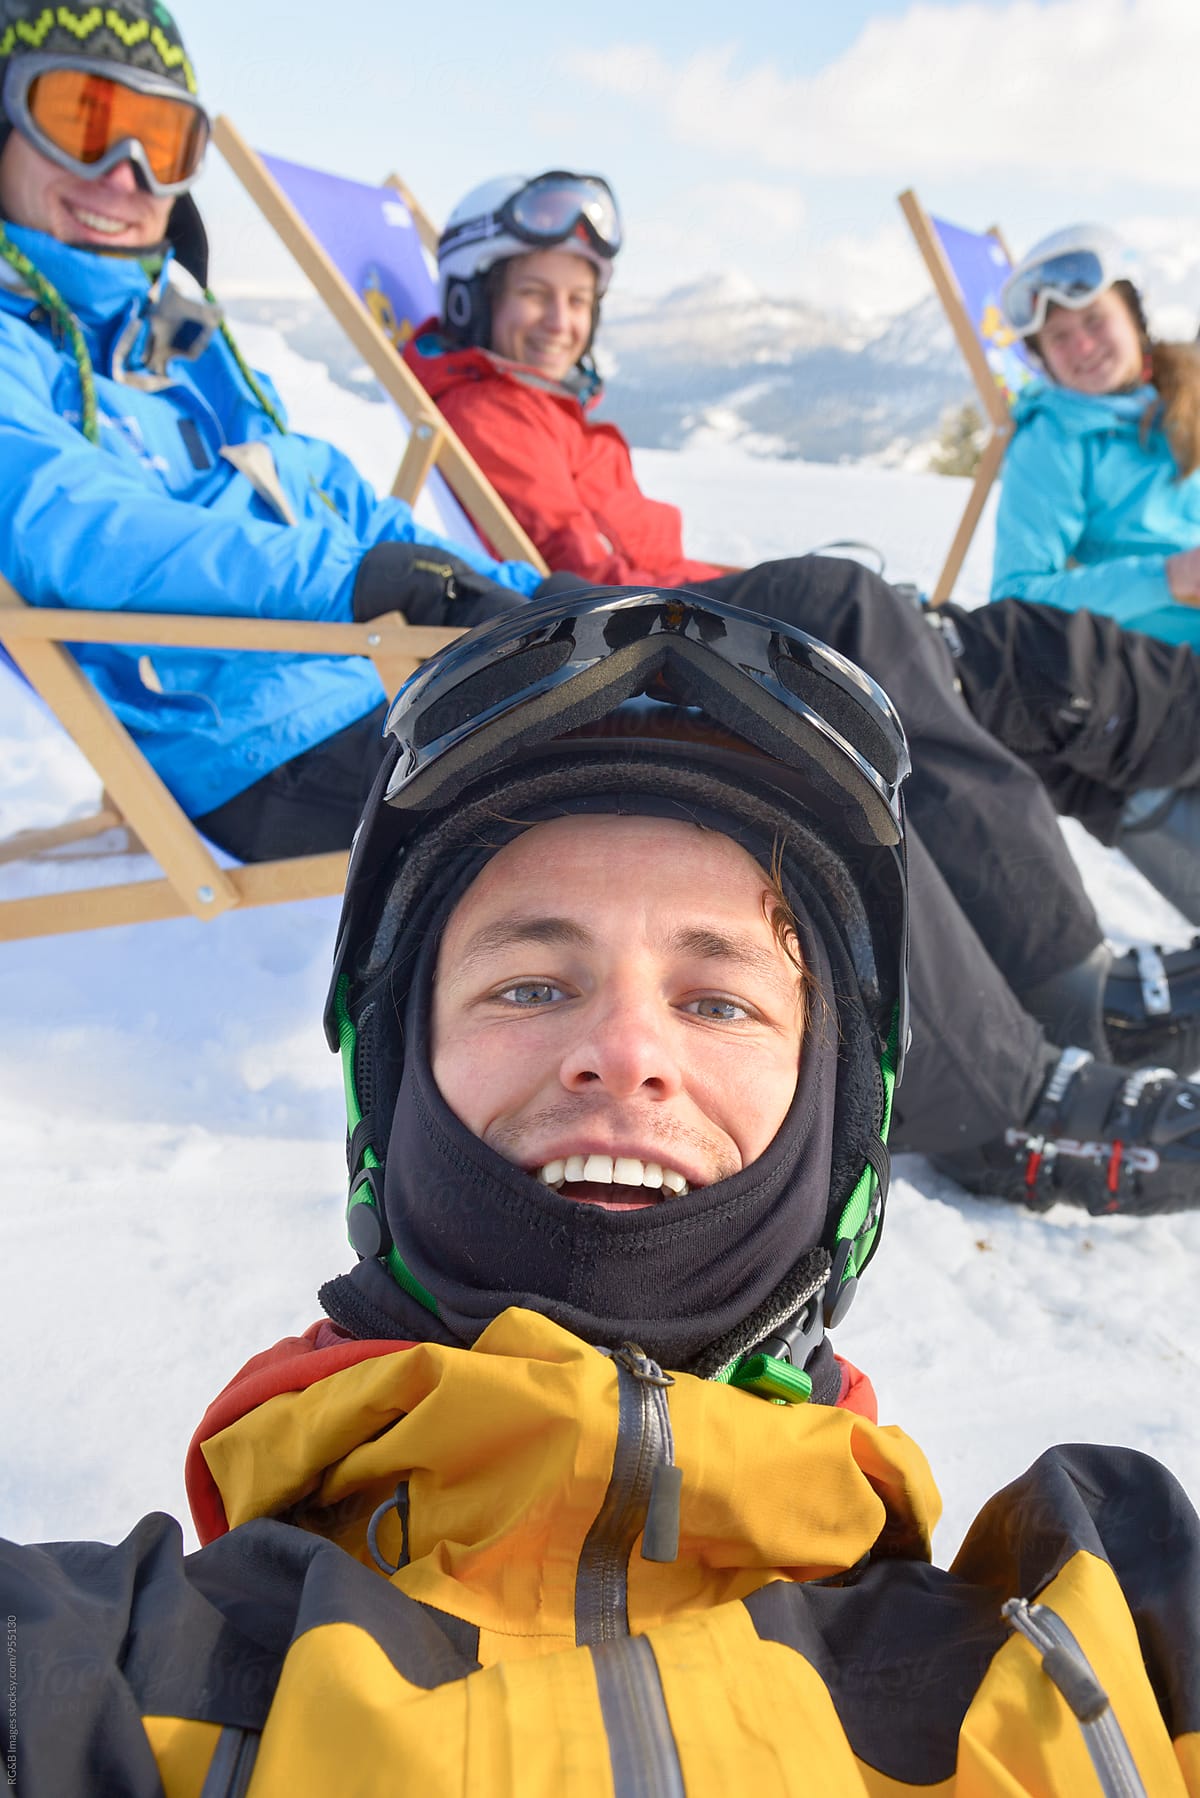 Friends taking a selfie on the ski slope